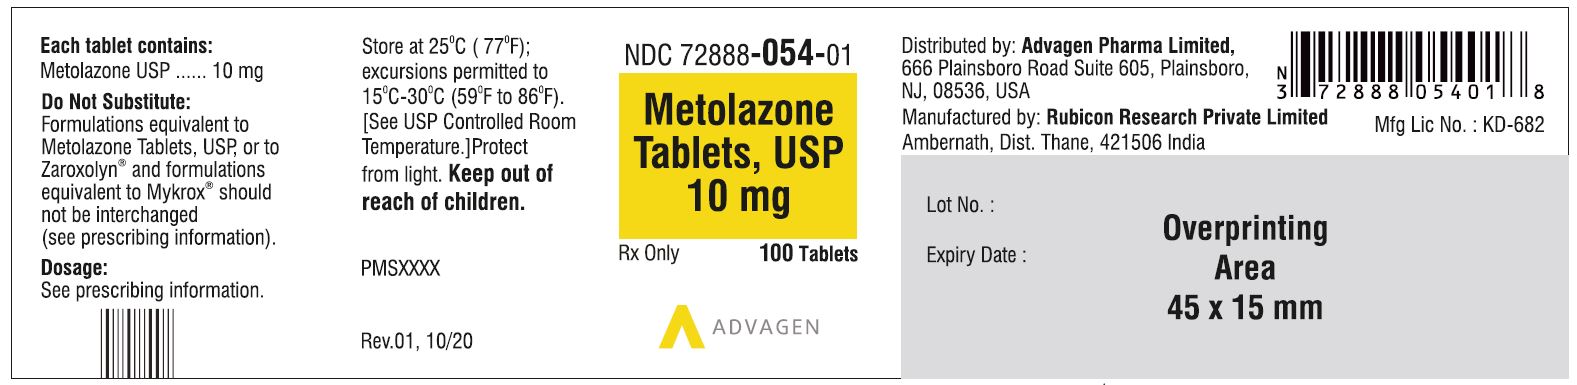 Metolazone Tablets USP, 10mg - NDC: <a href=/NDC/72888-054-01>72888-054-01</a> - 100 Tablets Bottle Label